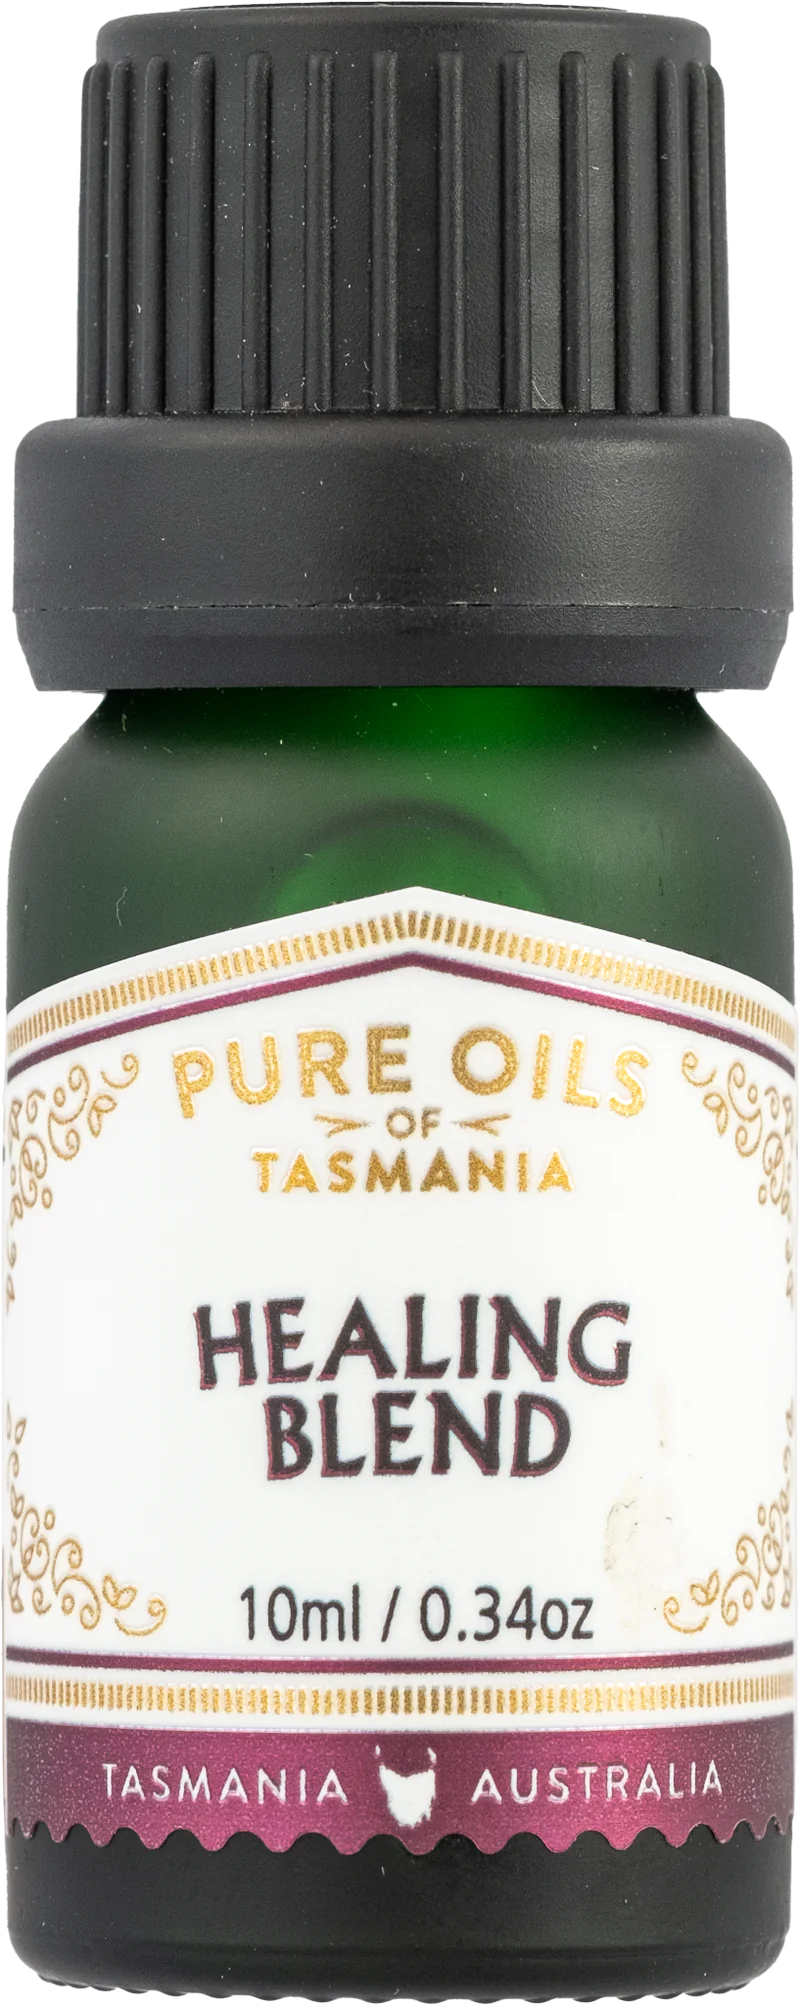 Pure Oil Blends - Pure Oils of Tasmania Body pure oils tasmania Healing Blend 